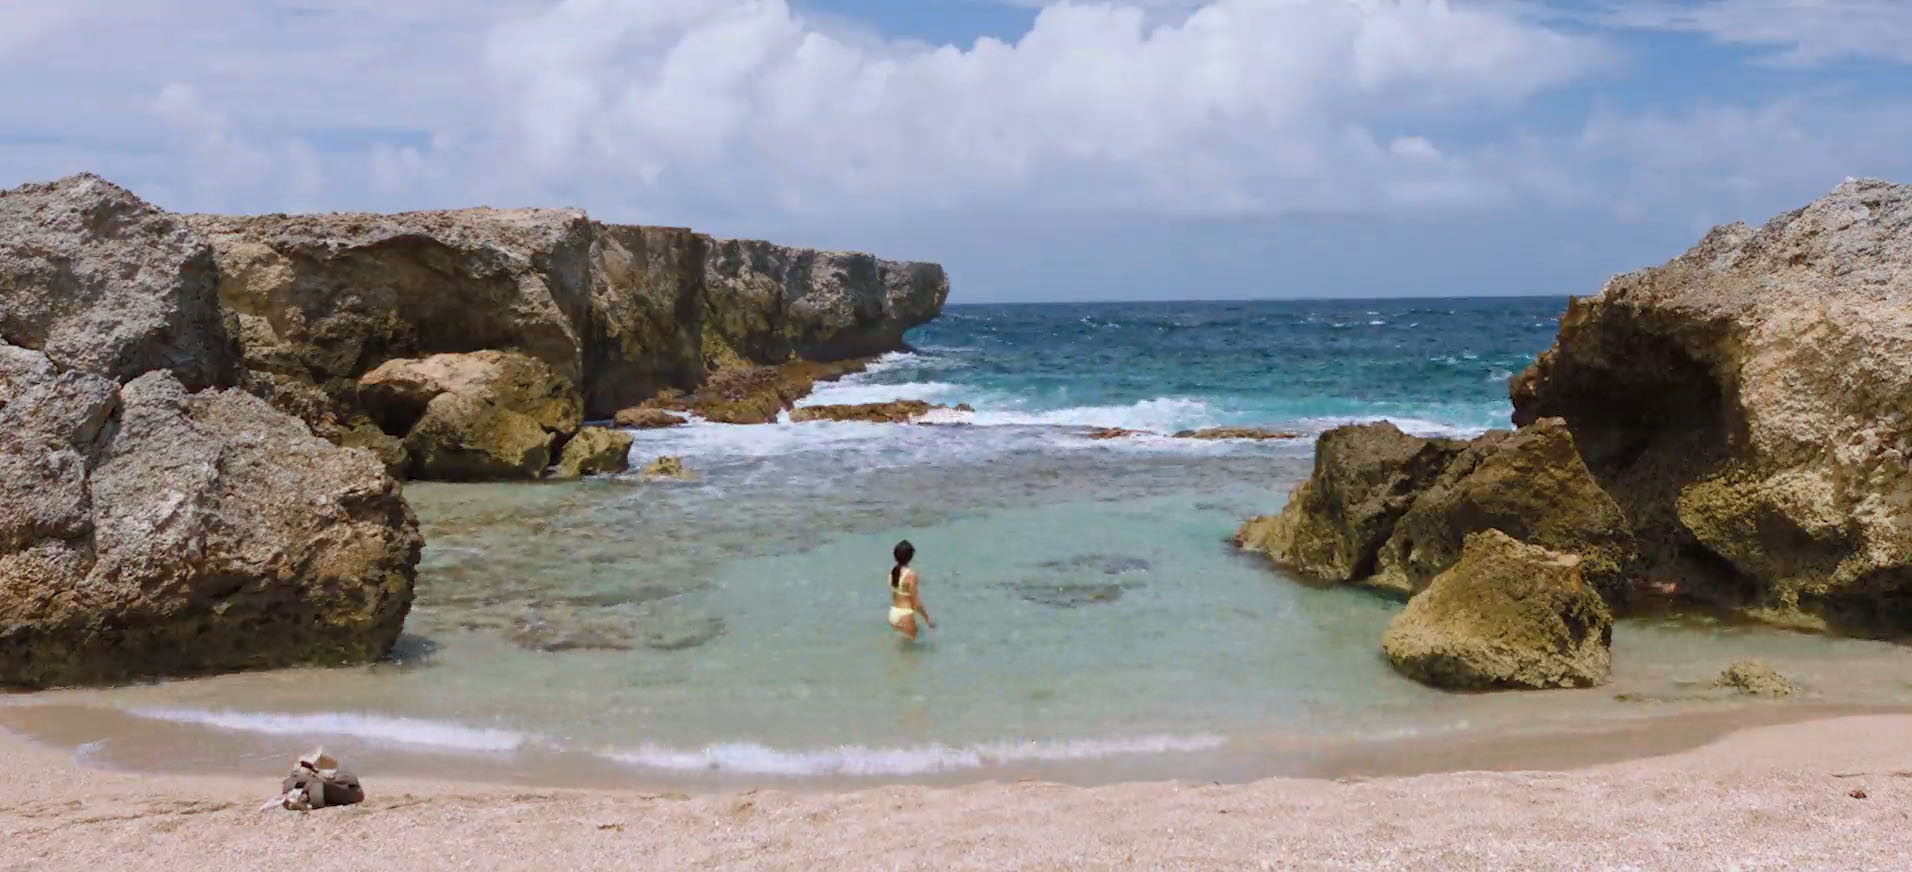 Women standing in ocean water surrounded by beach rocks